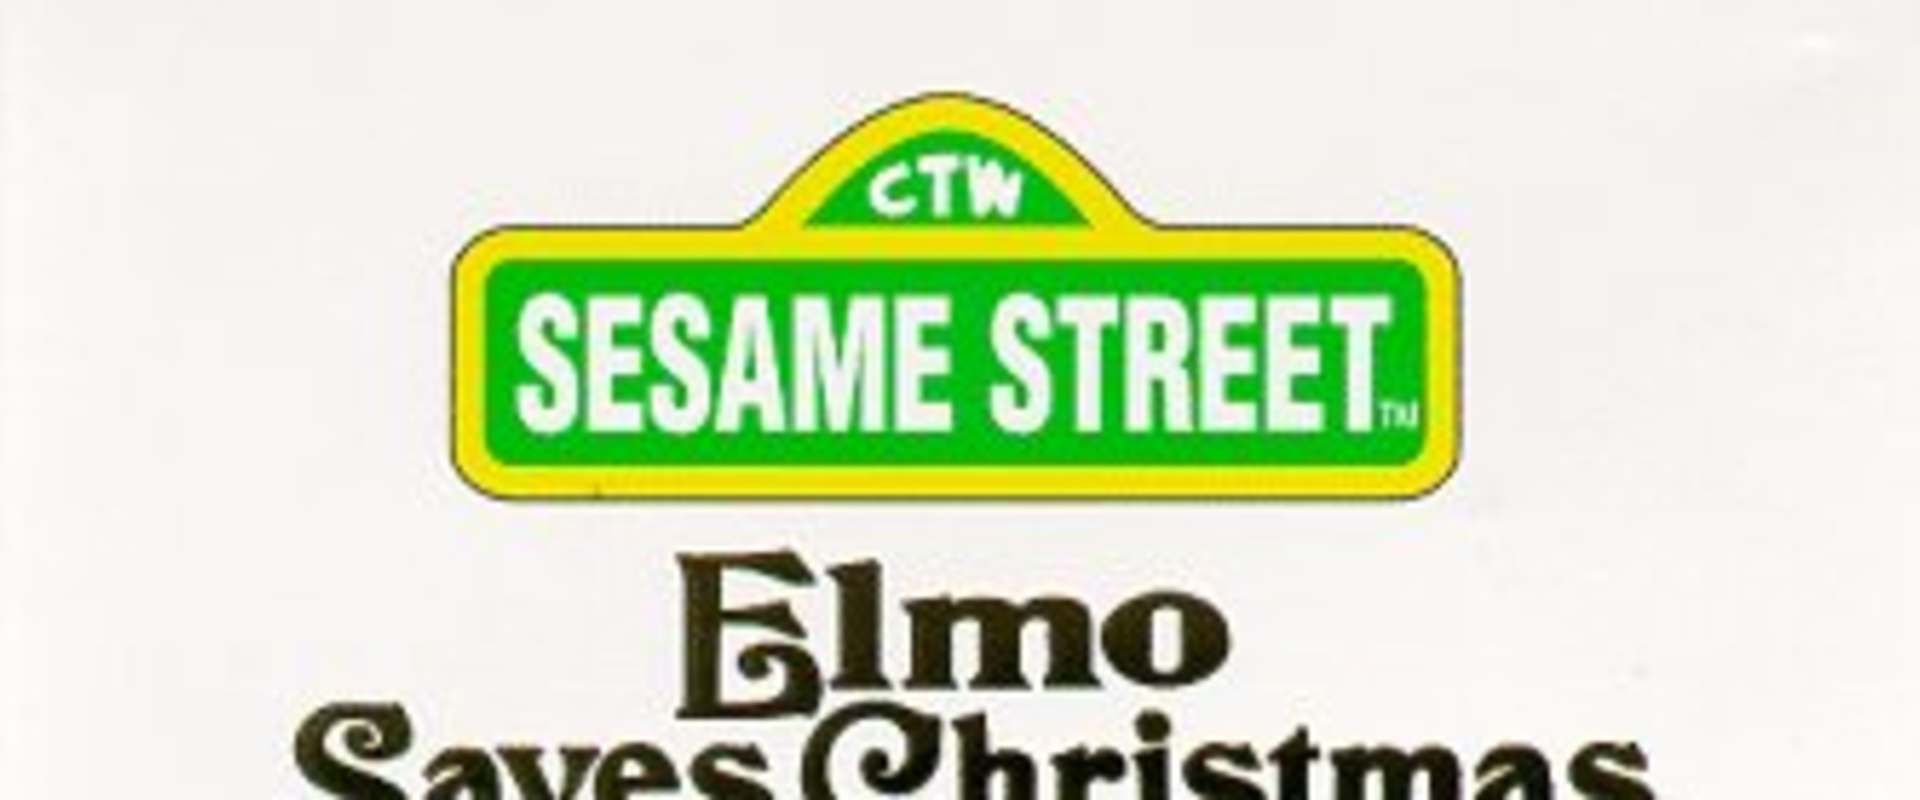 Sesame Street: Elmo Saves Christmas background 1